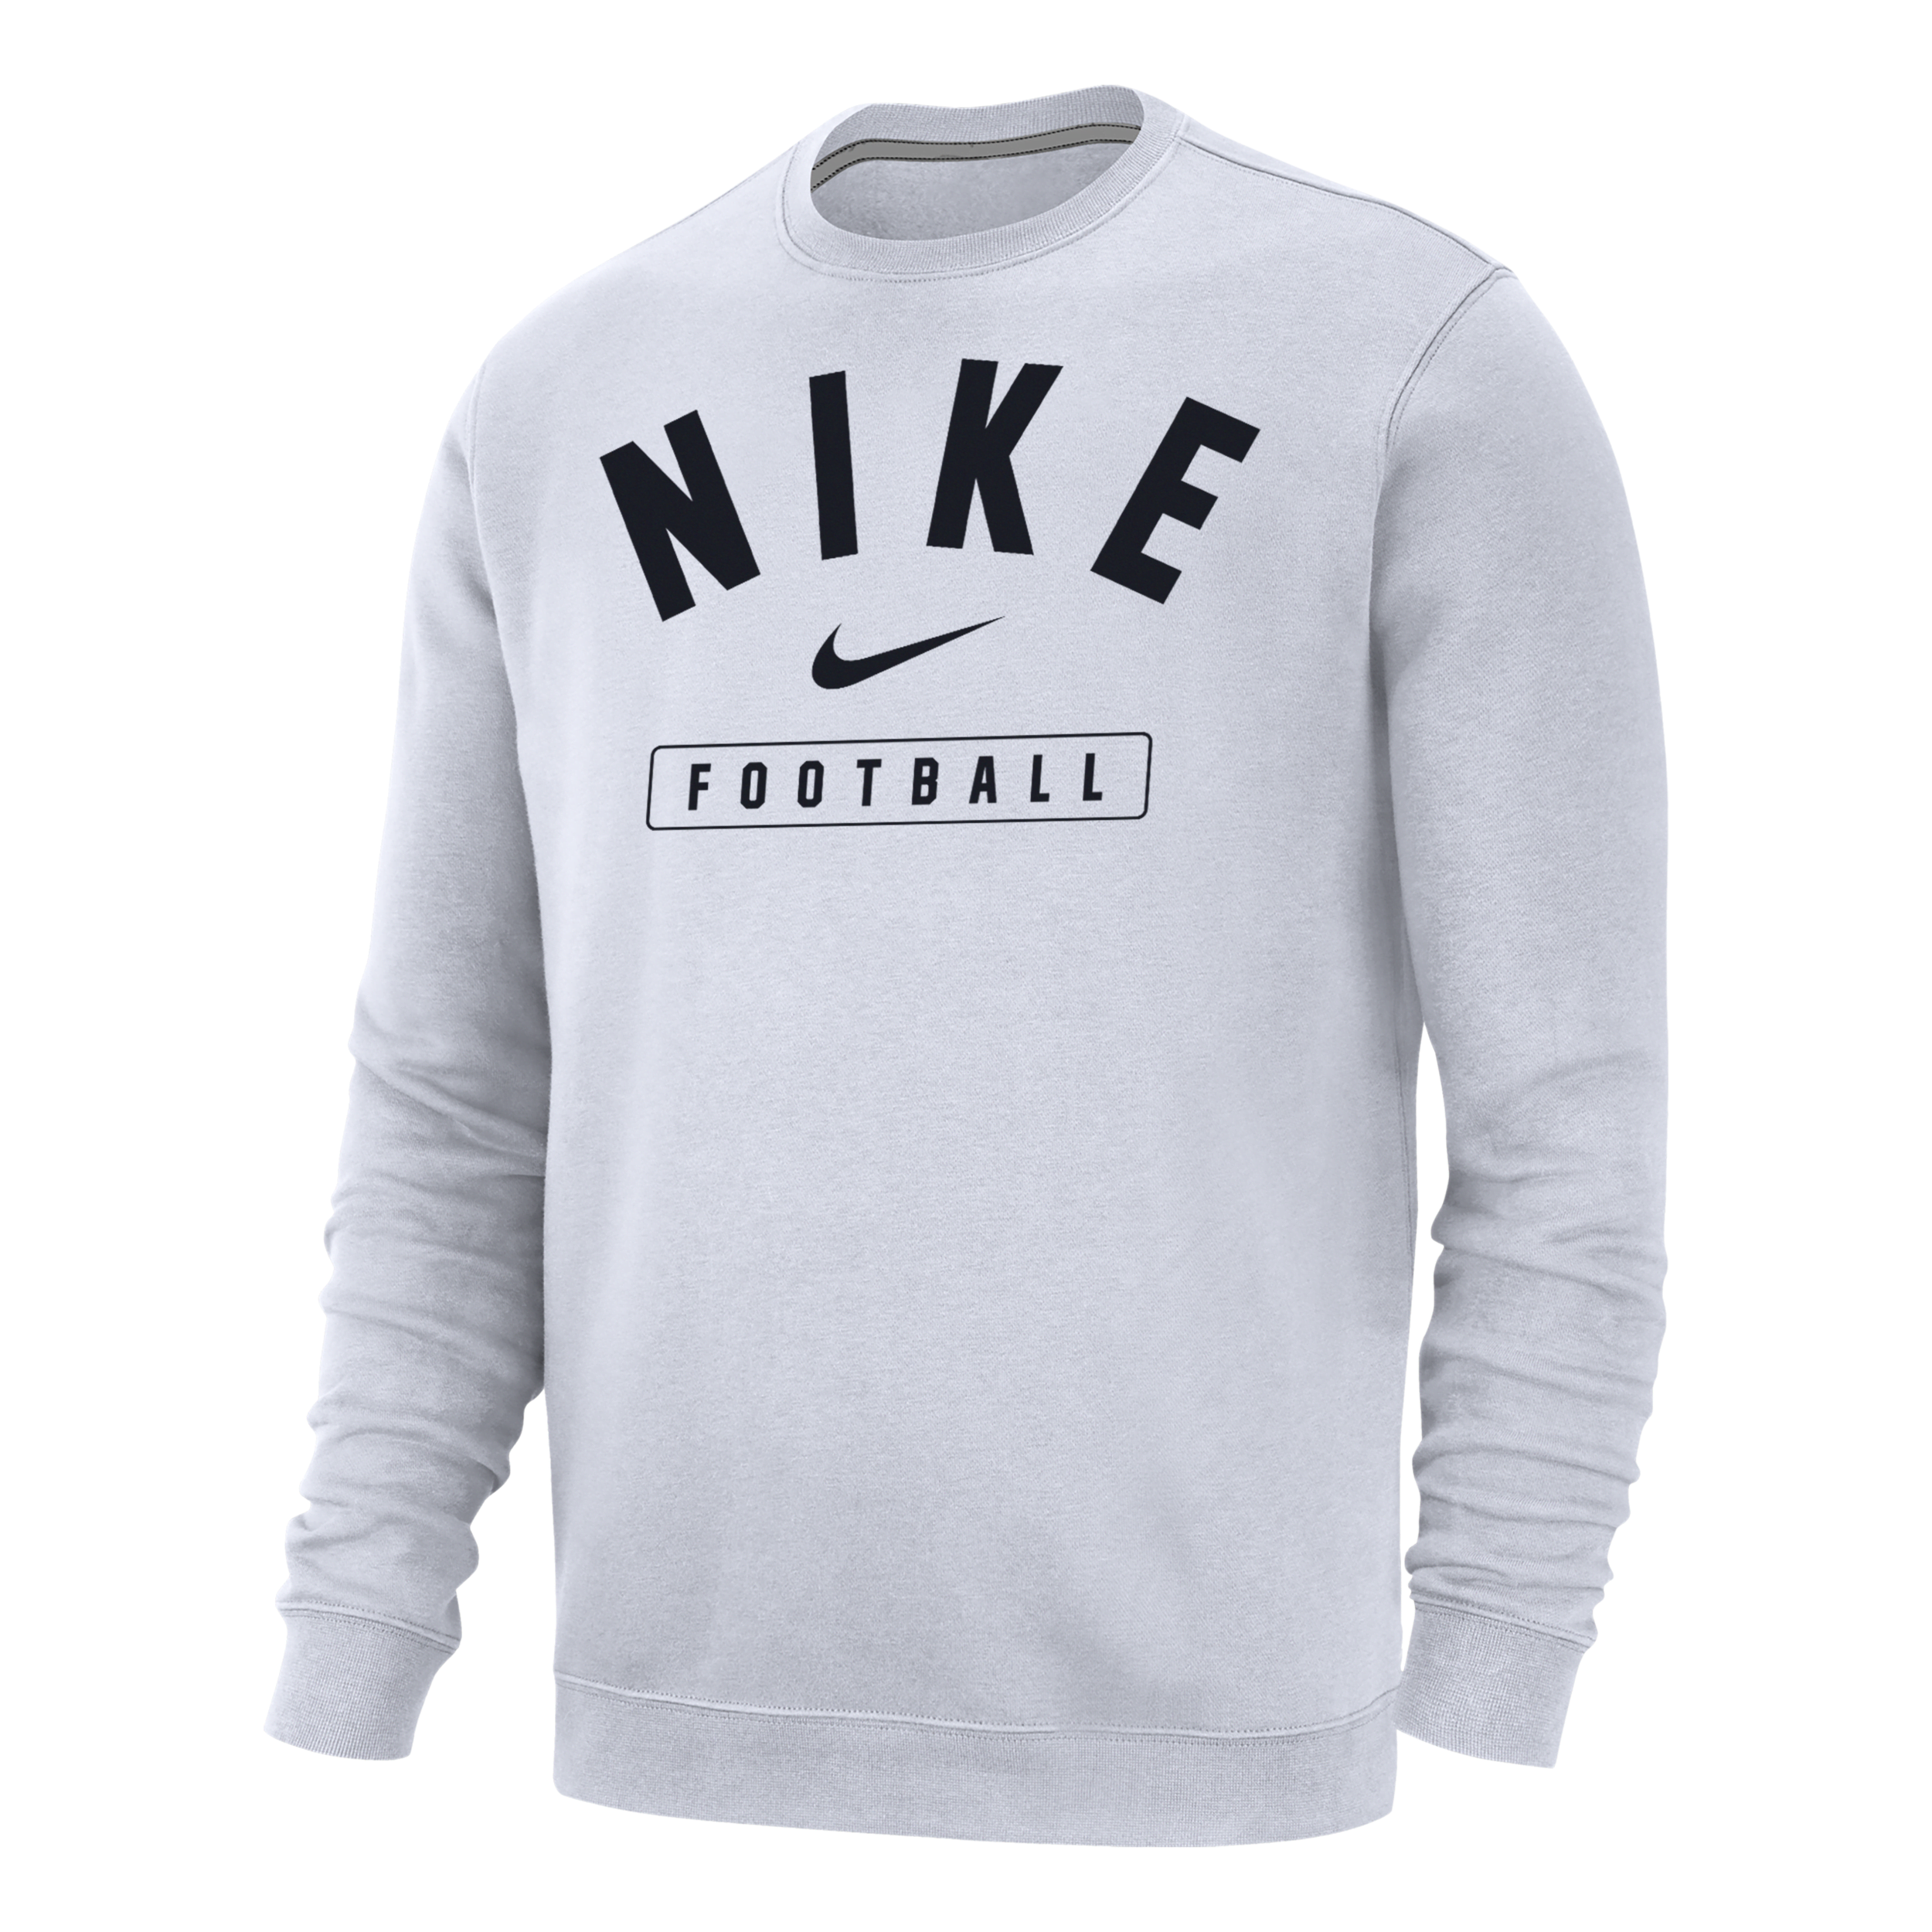 Nike Men's Football Crew-neck Sweatshirt In White